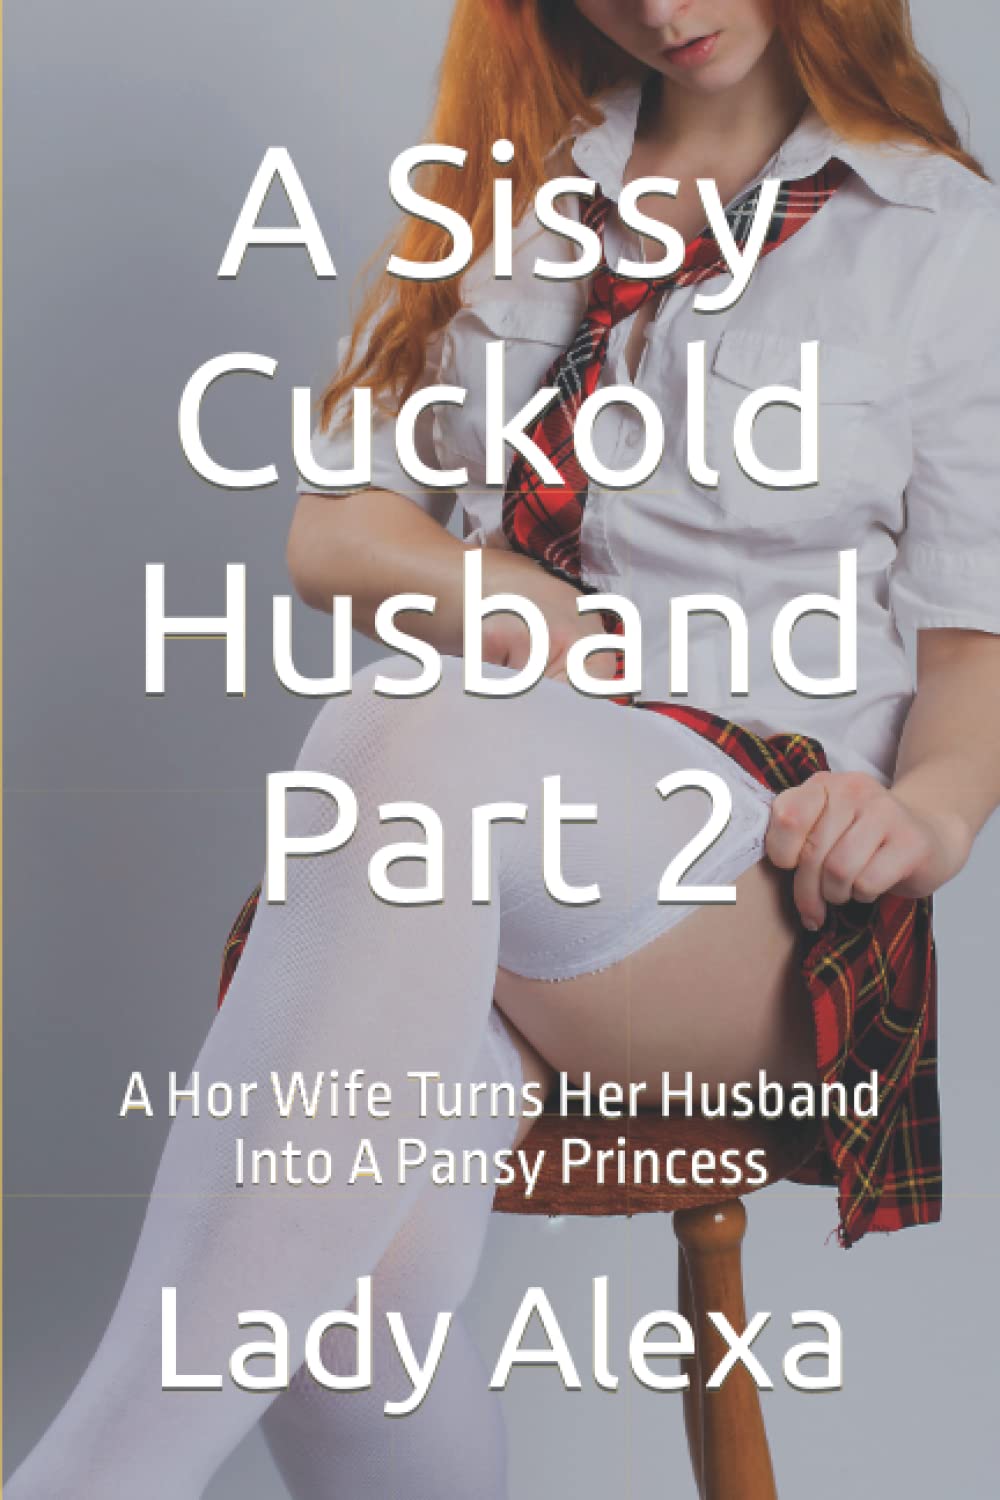 daniel osei recommends Sissy Cuckold Husband